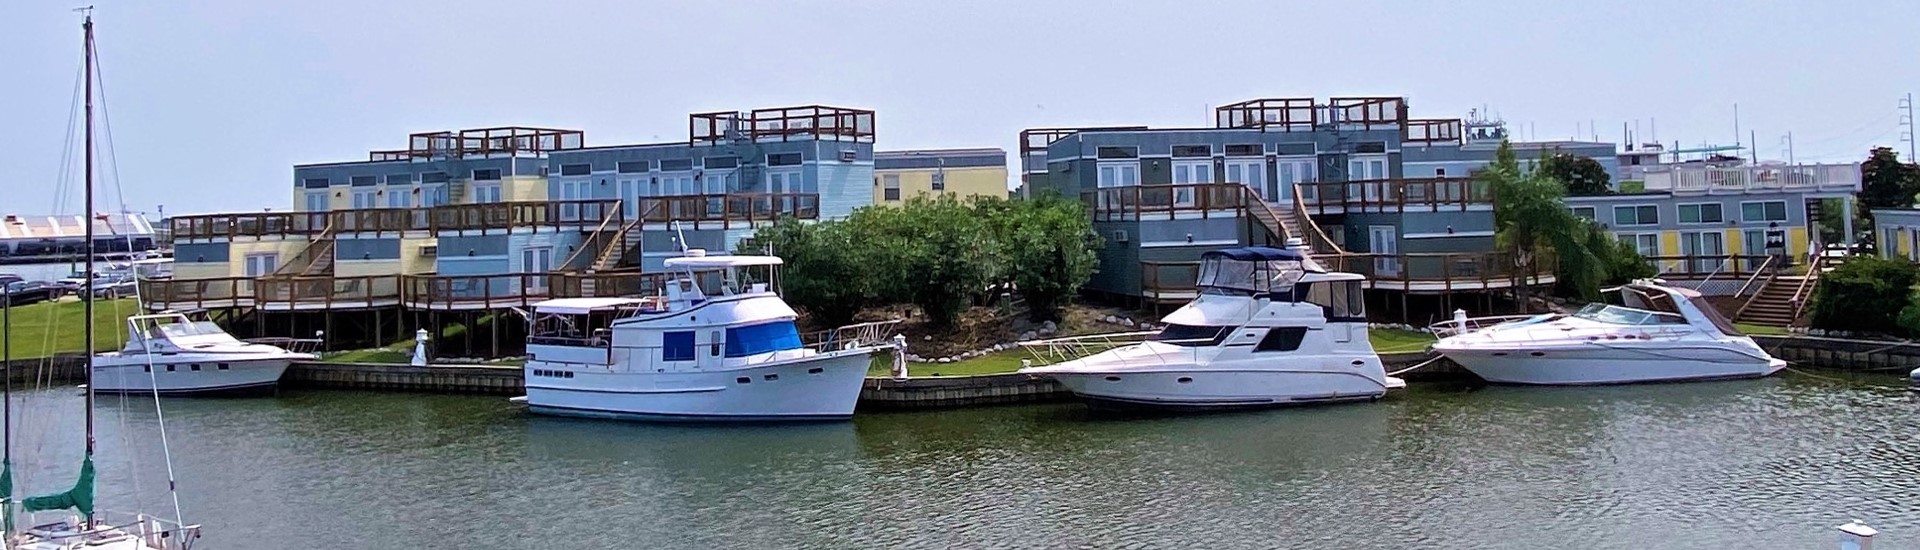 Waterfront Villas amp Vacation Rentals New Orleans RV Resort